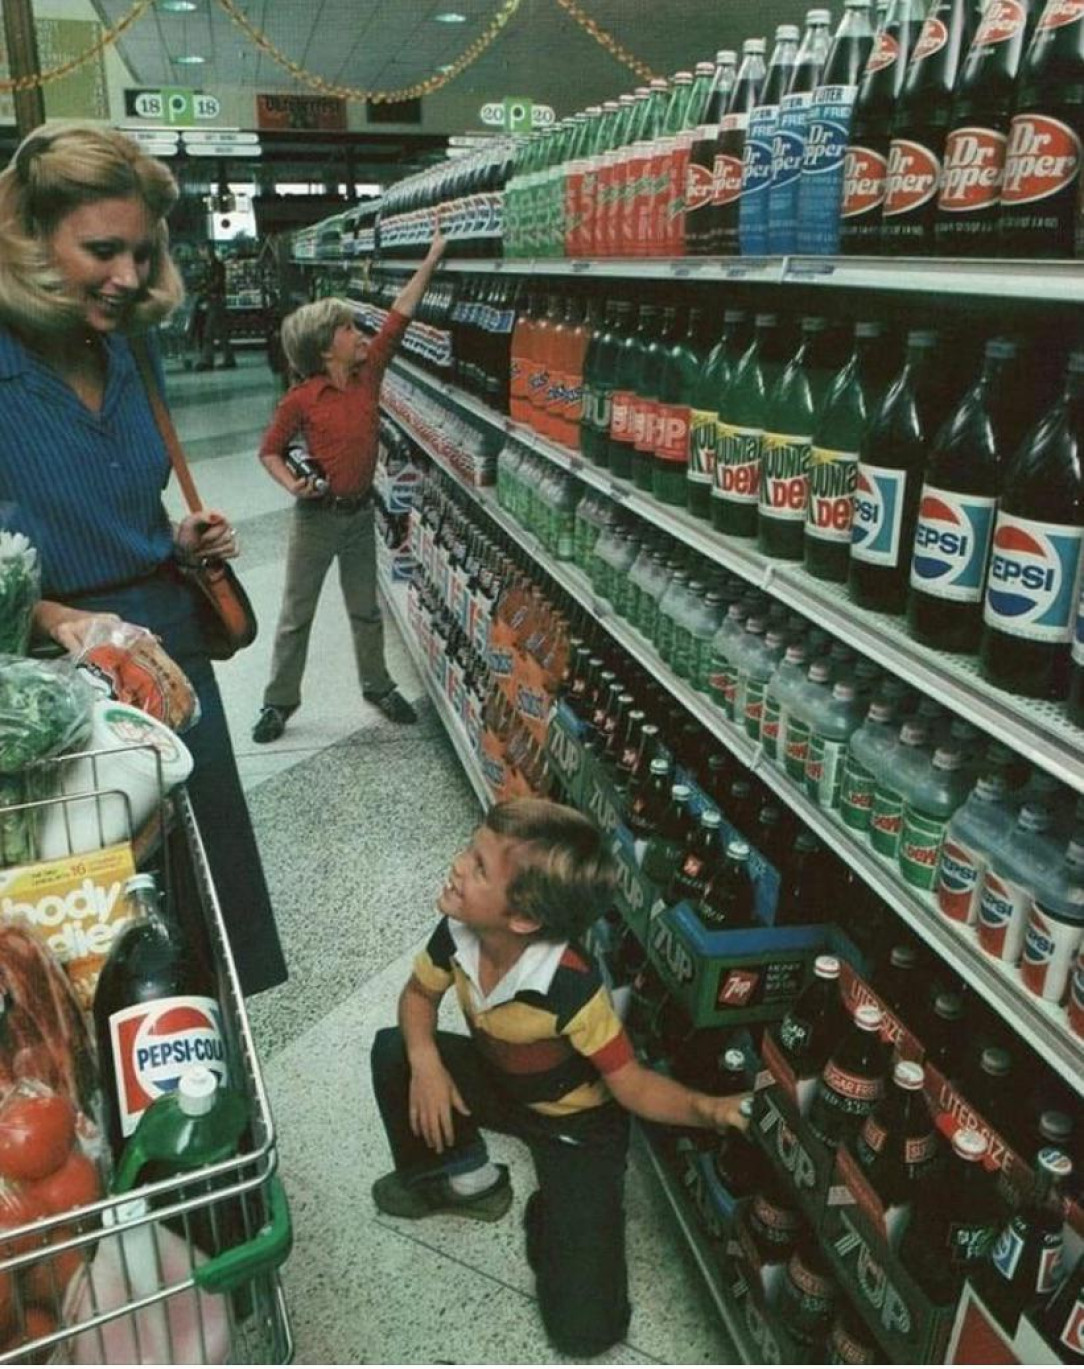 1980, Every bottle on the shelf was still glass